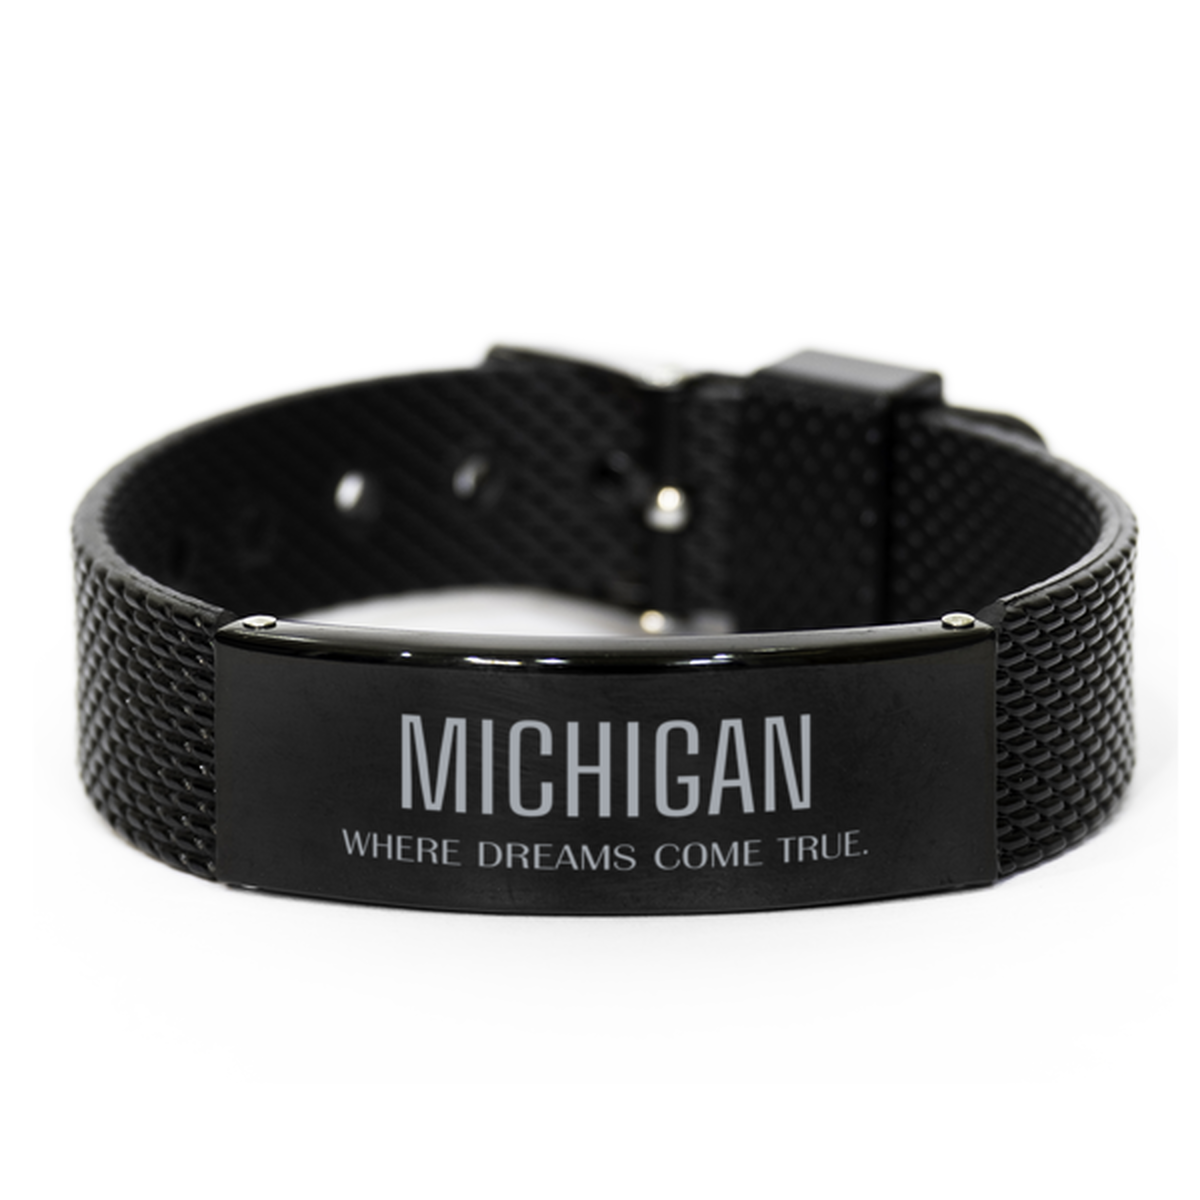 Love Michigan State Black Shark Mesh Bracelet, Michigan Where dreams come true, Birthday Inspirational Gifts For Michigan Men, Women, Friends